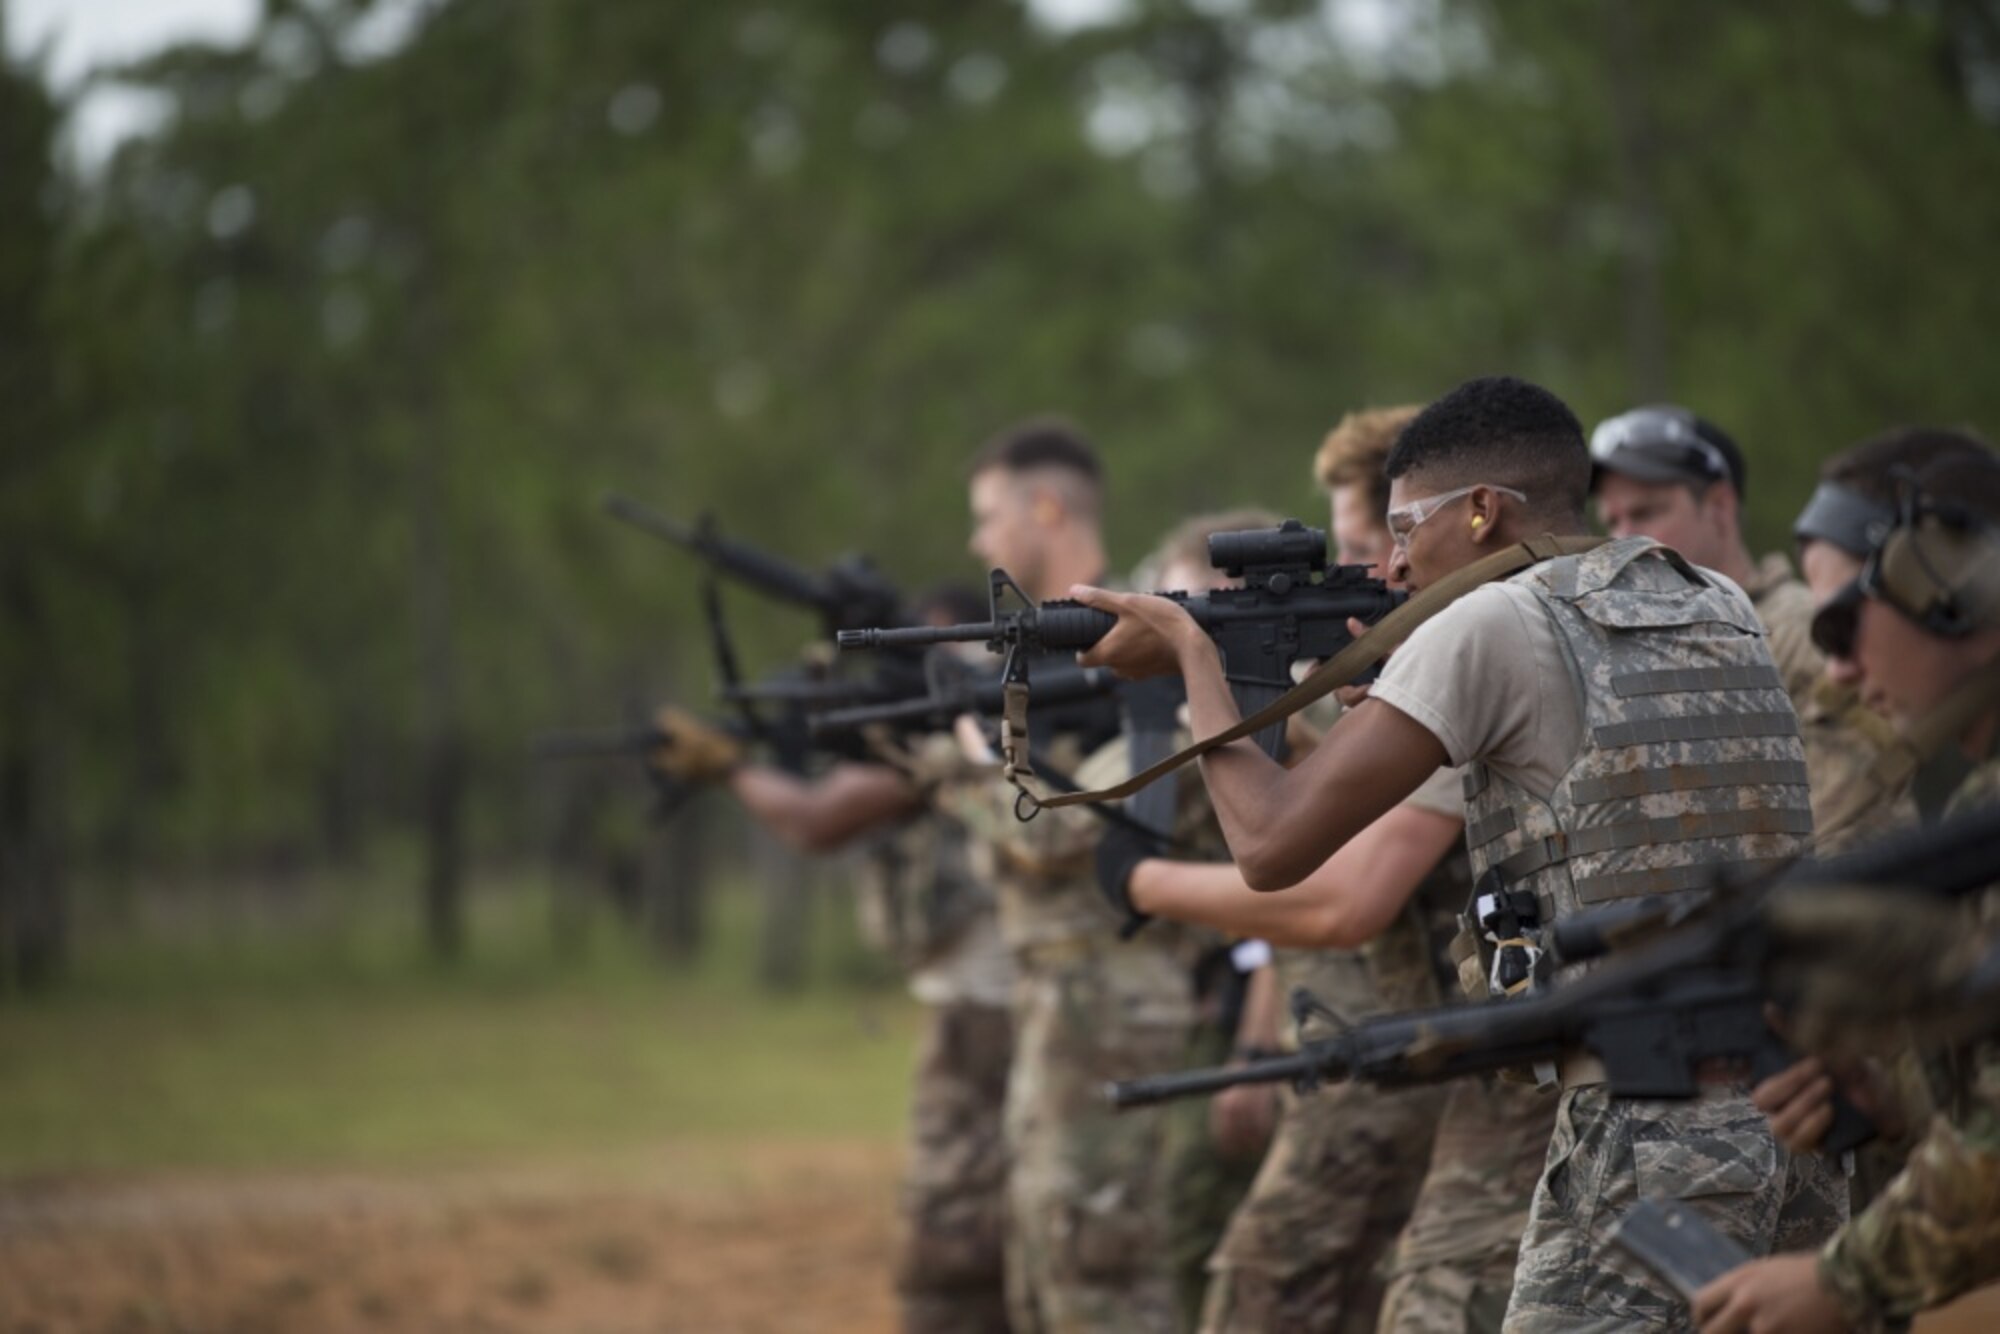 Simulated partner force members train basic rifle skills alongside Air Force Special Tactics operators as part of Commando Crubicle at Eglin Range, Florida, June 22, 2020.